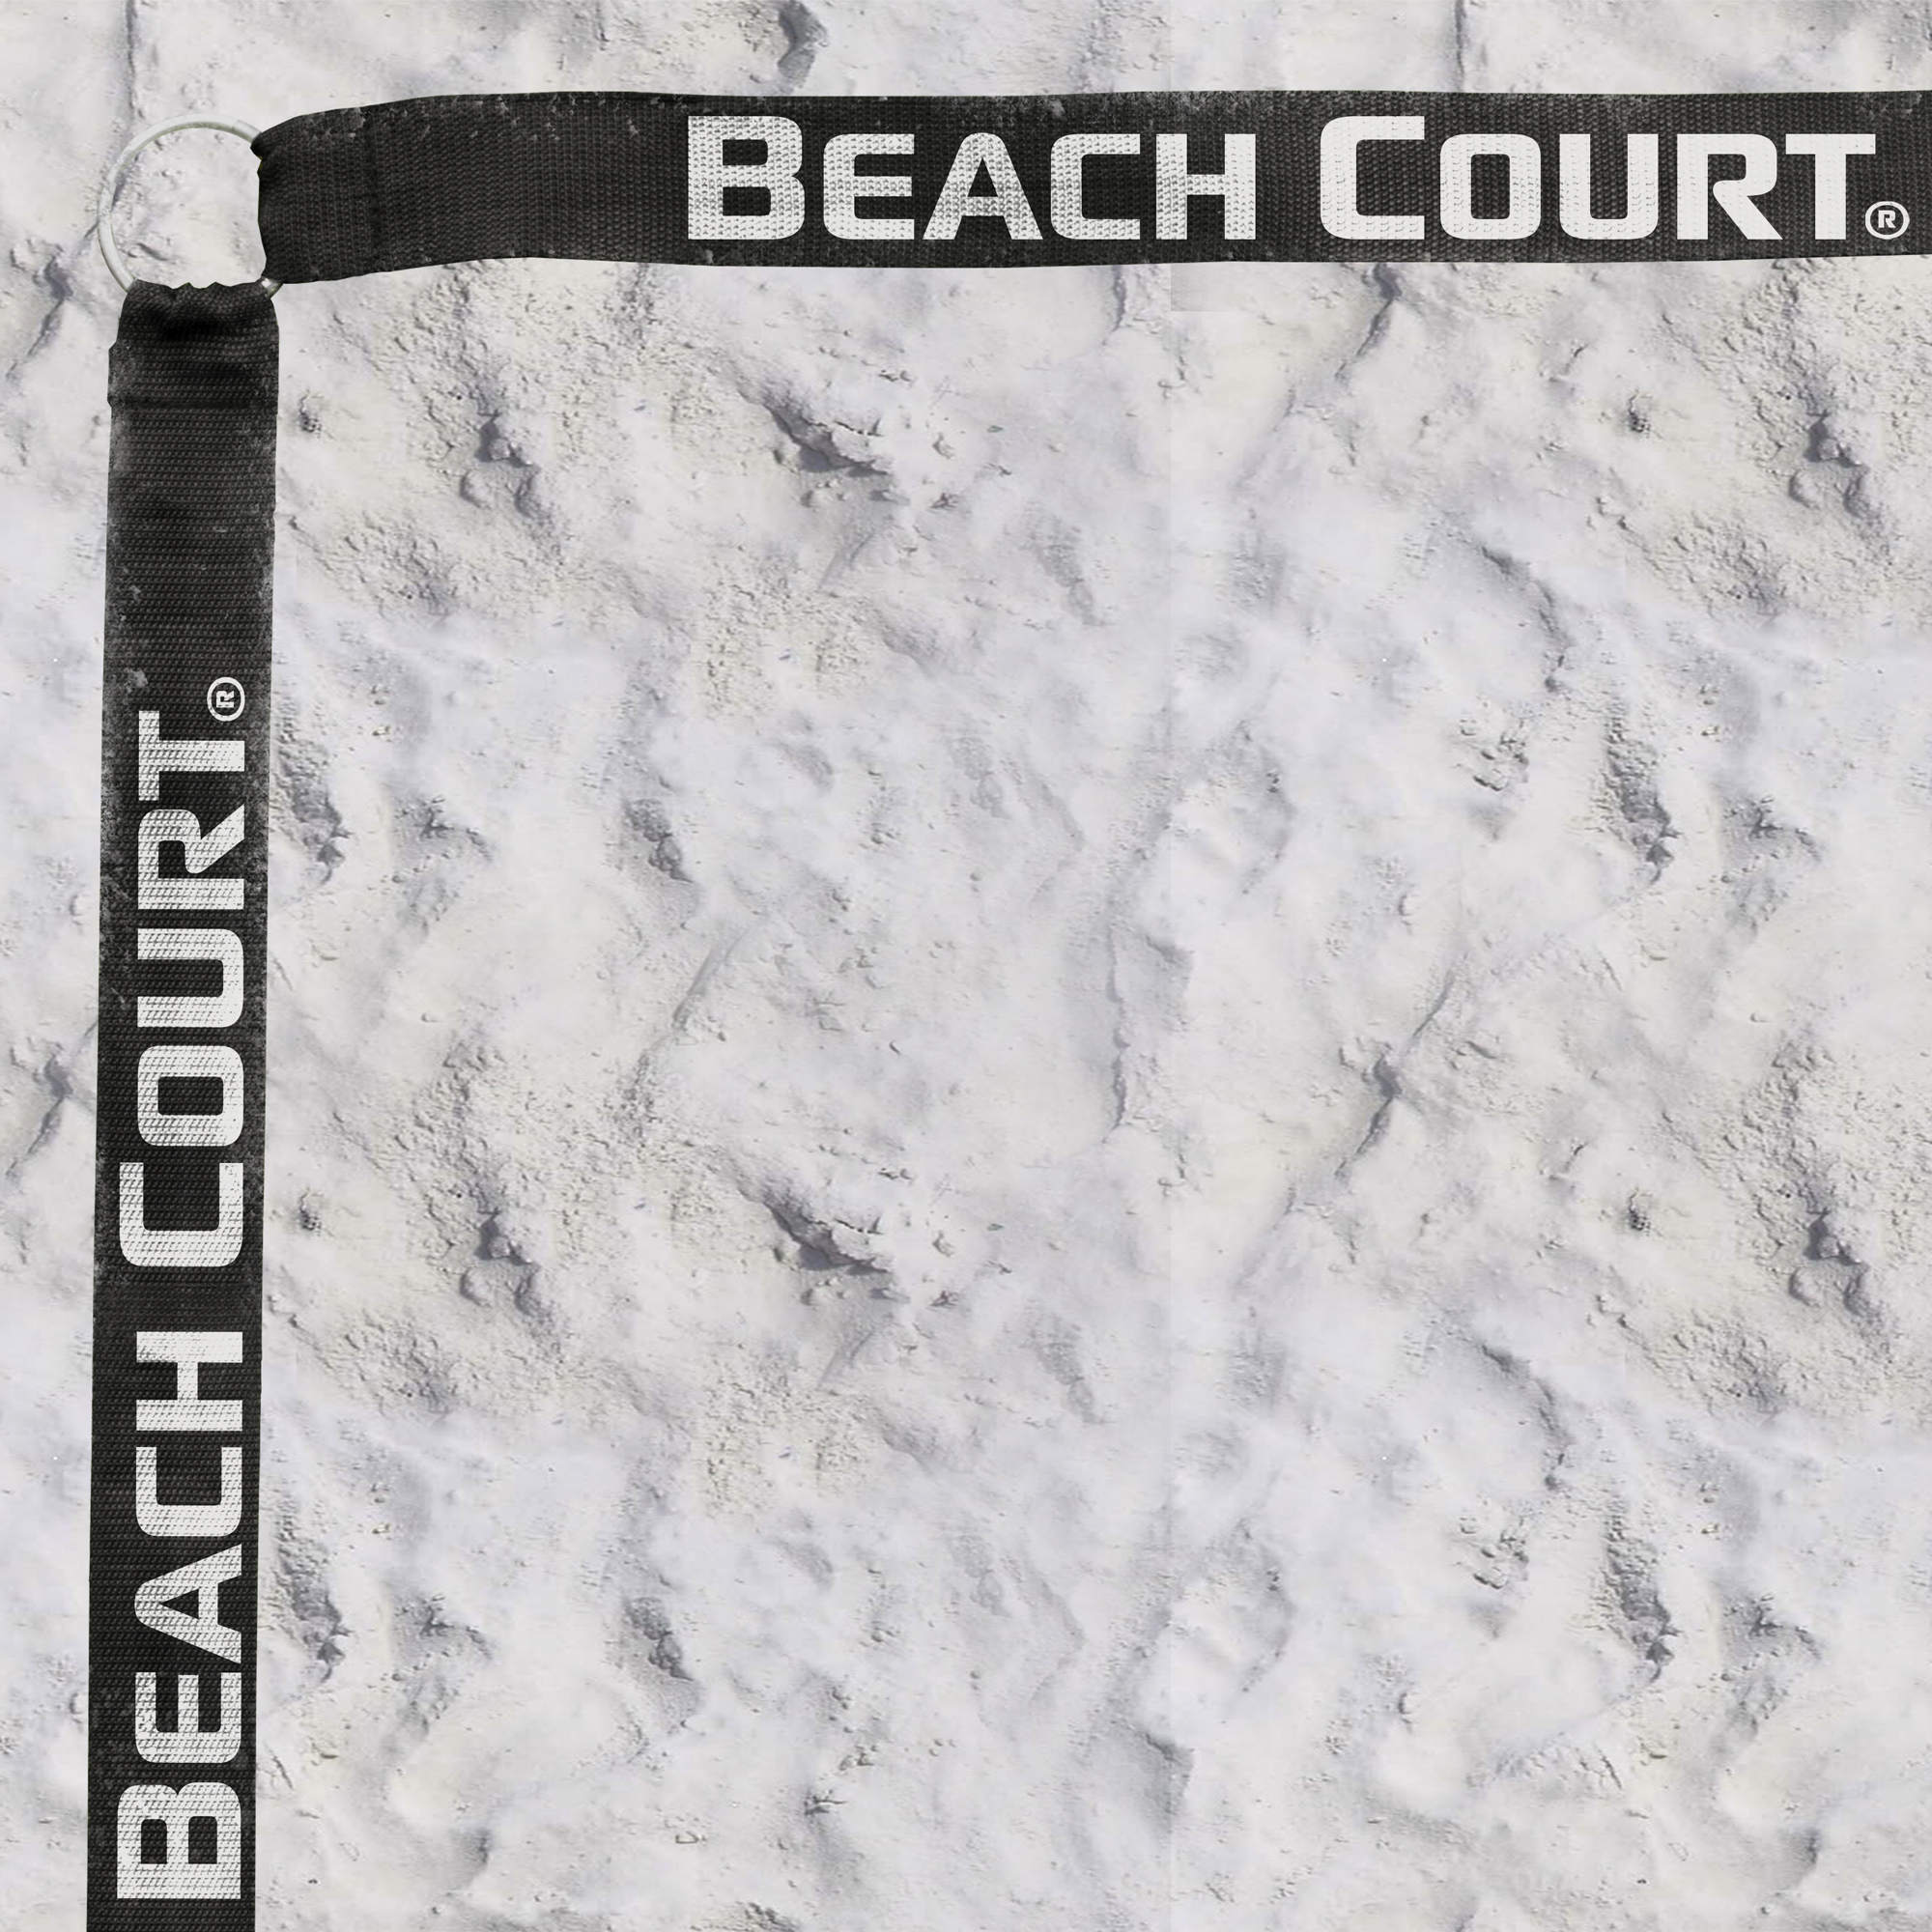 best Beach court Volleyball boundary for beach volleyball